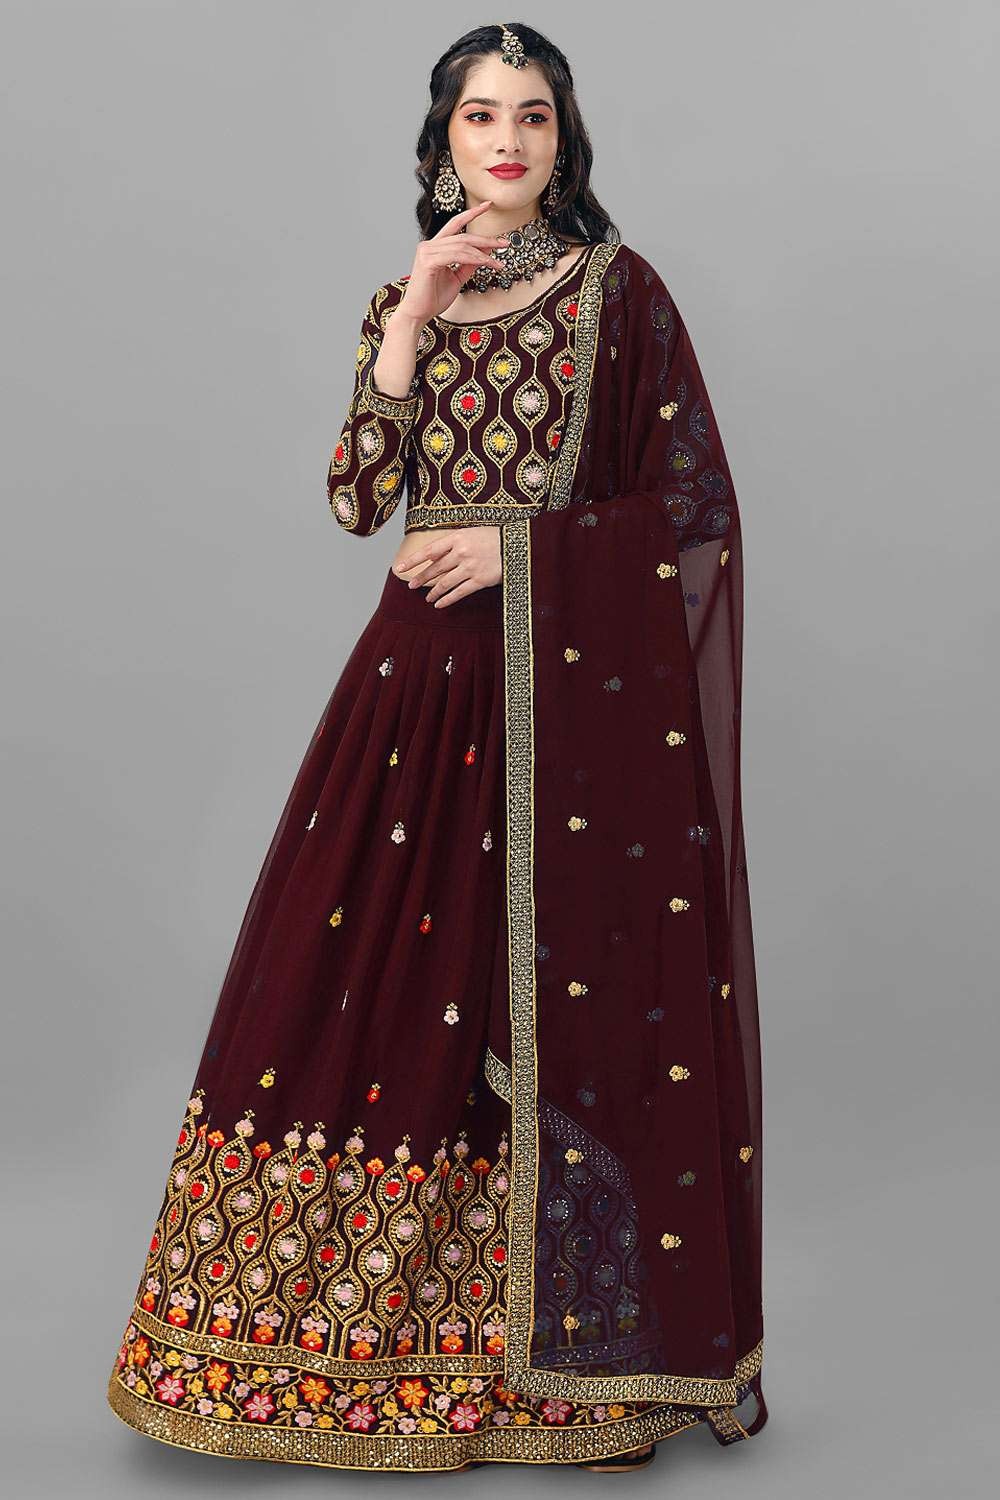 Buy Pakistani Bridal Lehenga in Deep Maroon Color Online 2021 – Nameera by  Farooq